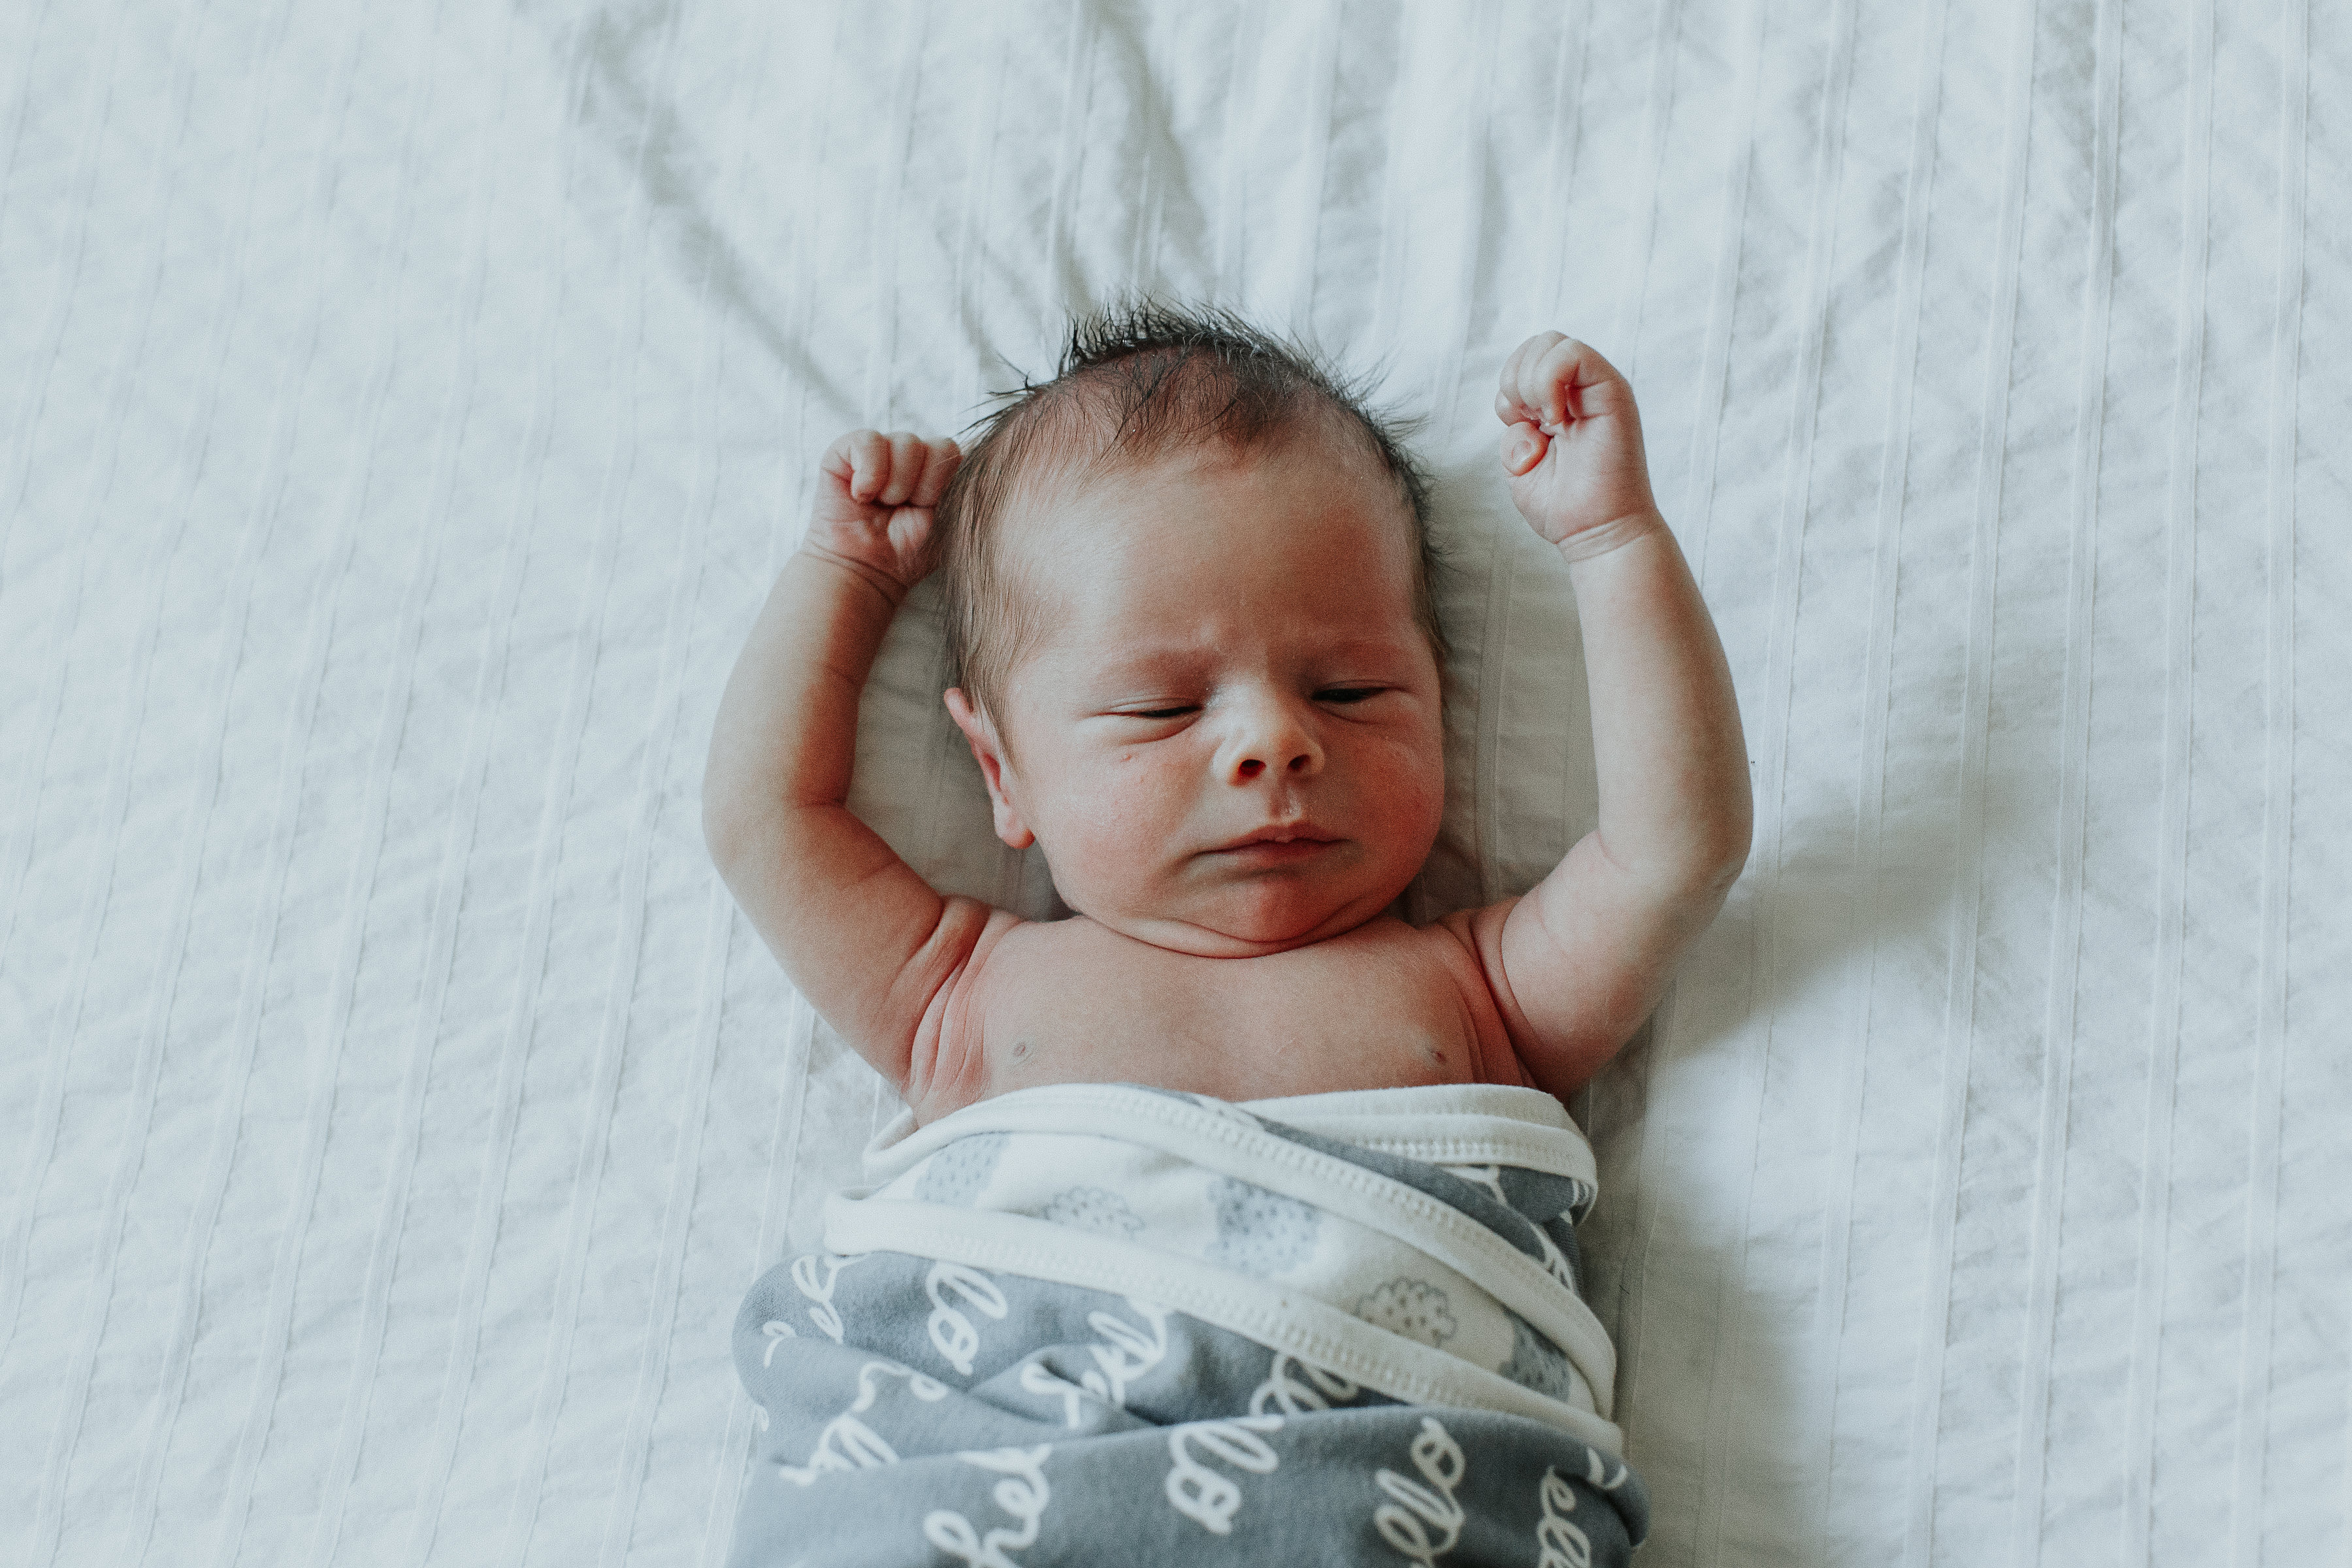 edmonton newborn photography